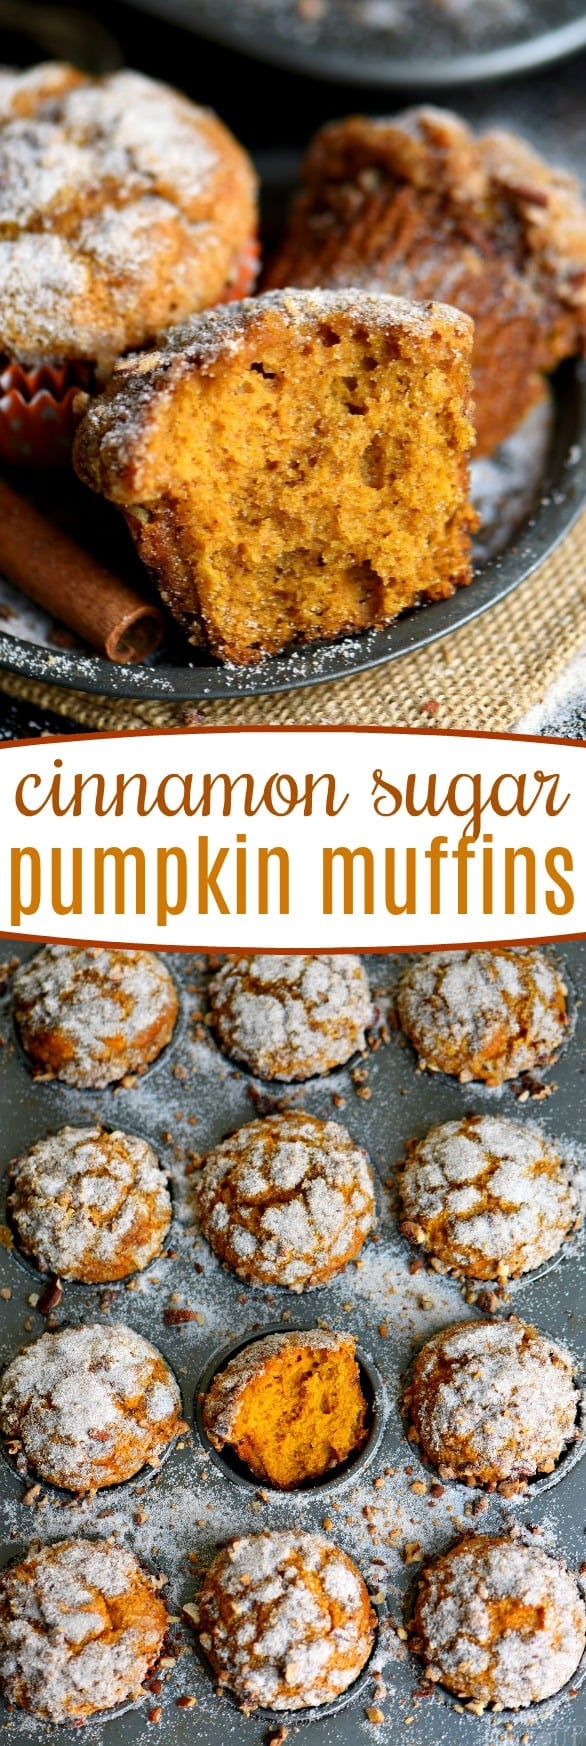 cinnamon-sugar-pumpkin-muffins-pan-close-up-800x1122